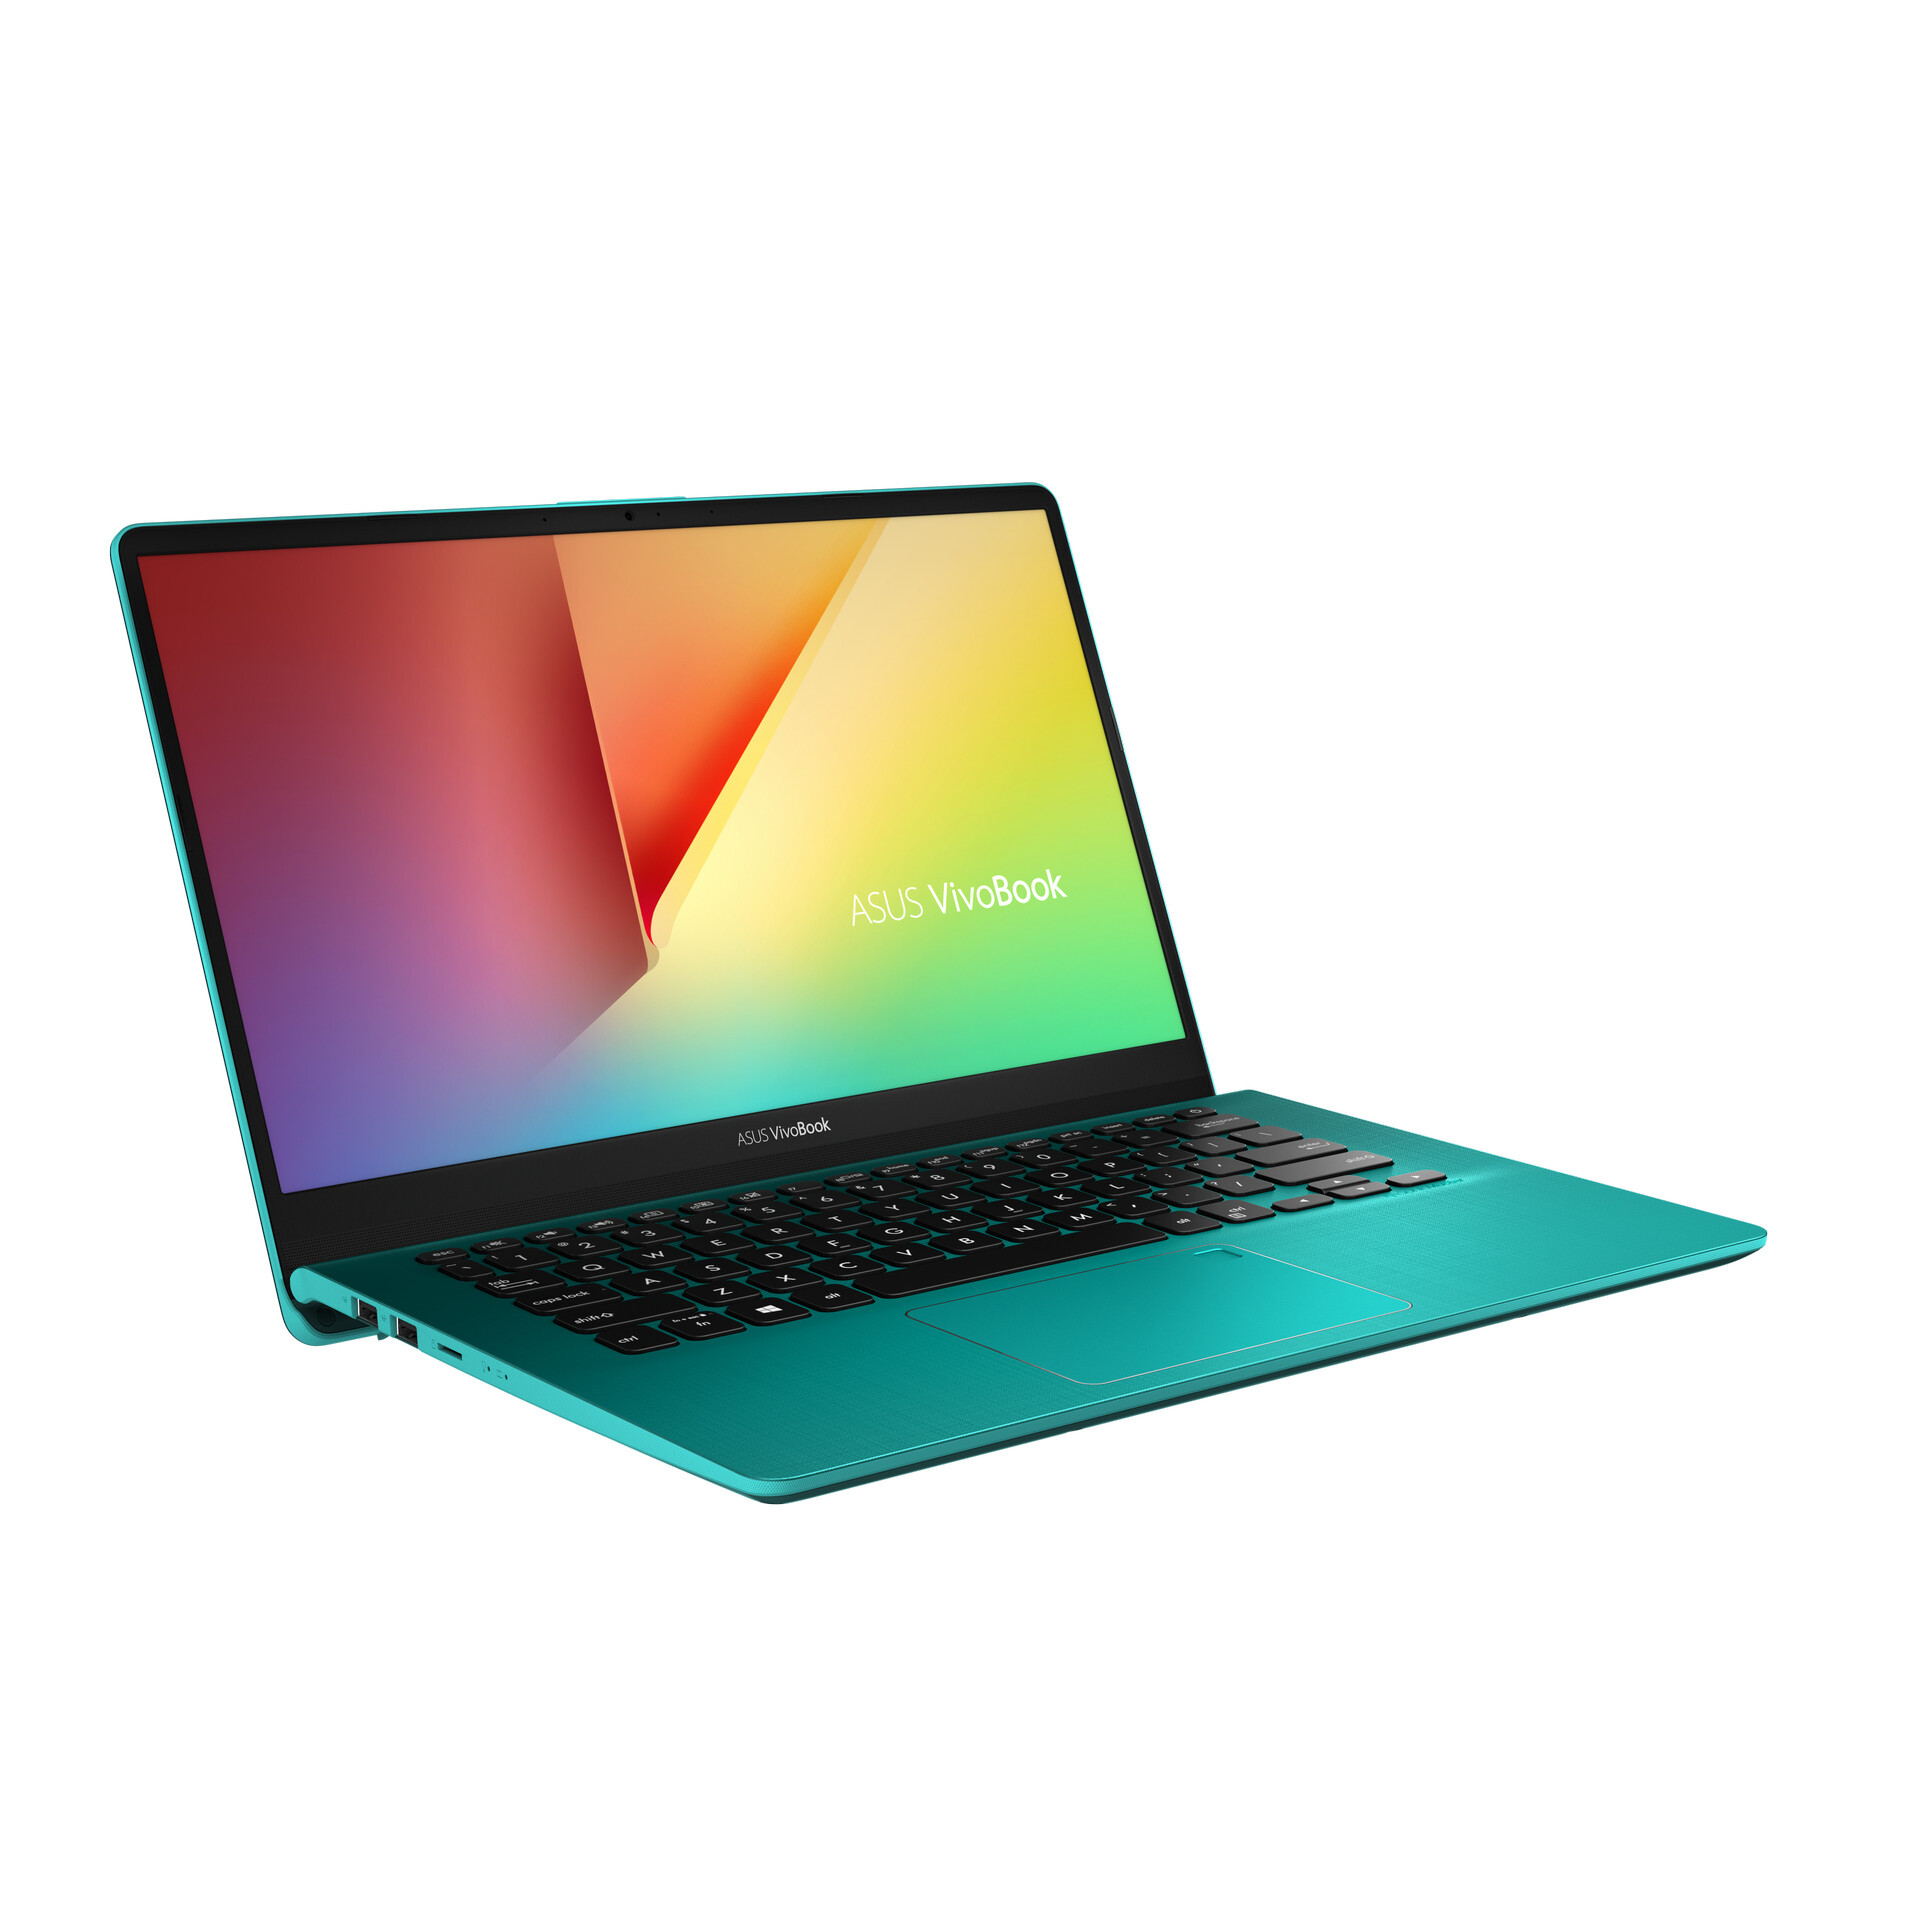 Laptop Asus Vivobook S14 S430FA-EB076T - Intel core i5-8265U, 4GB RAM, HDD 1TB, Intel UHD Graphics 620, 14 inch